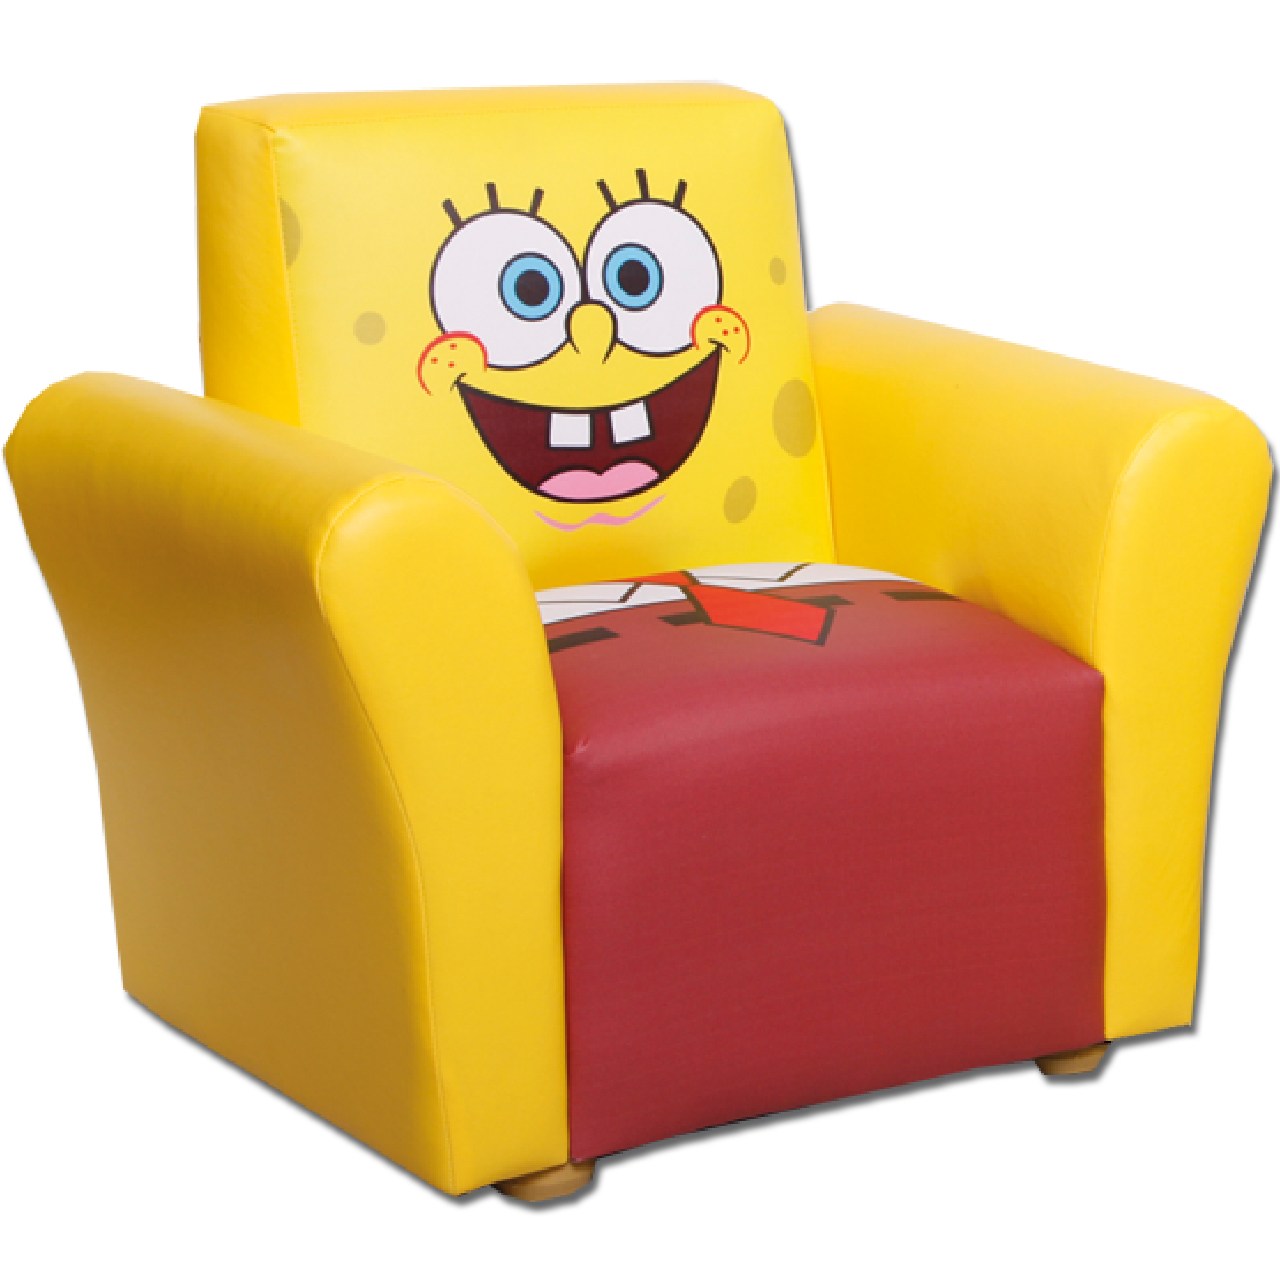 مبل کودک پینک مدل Spongebob